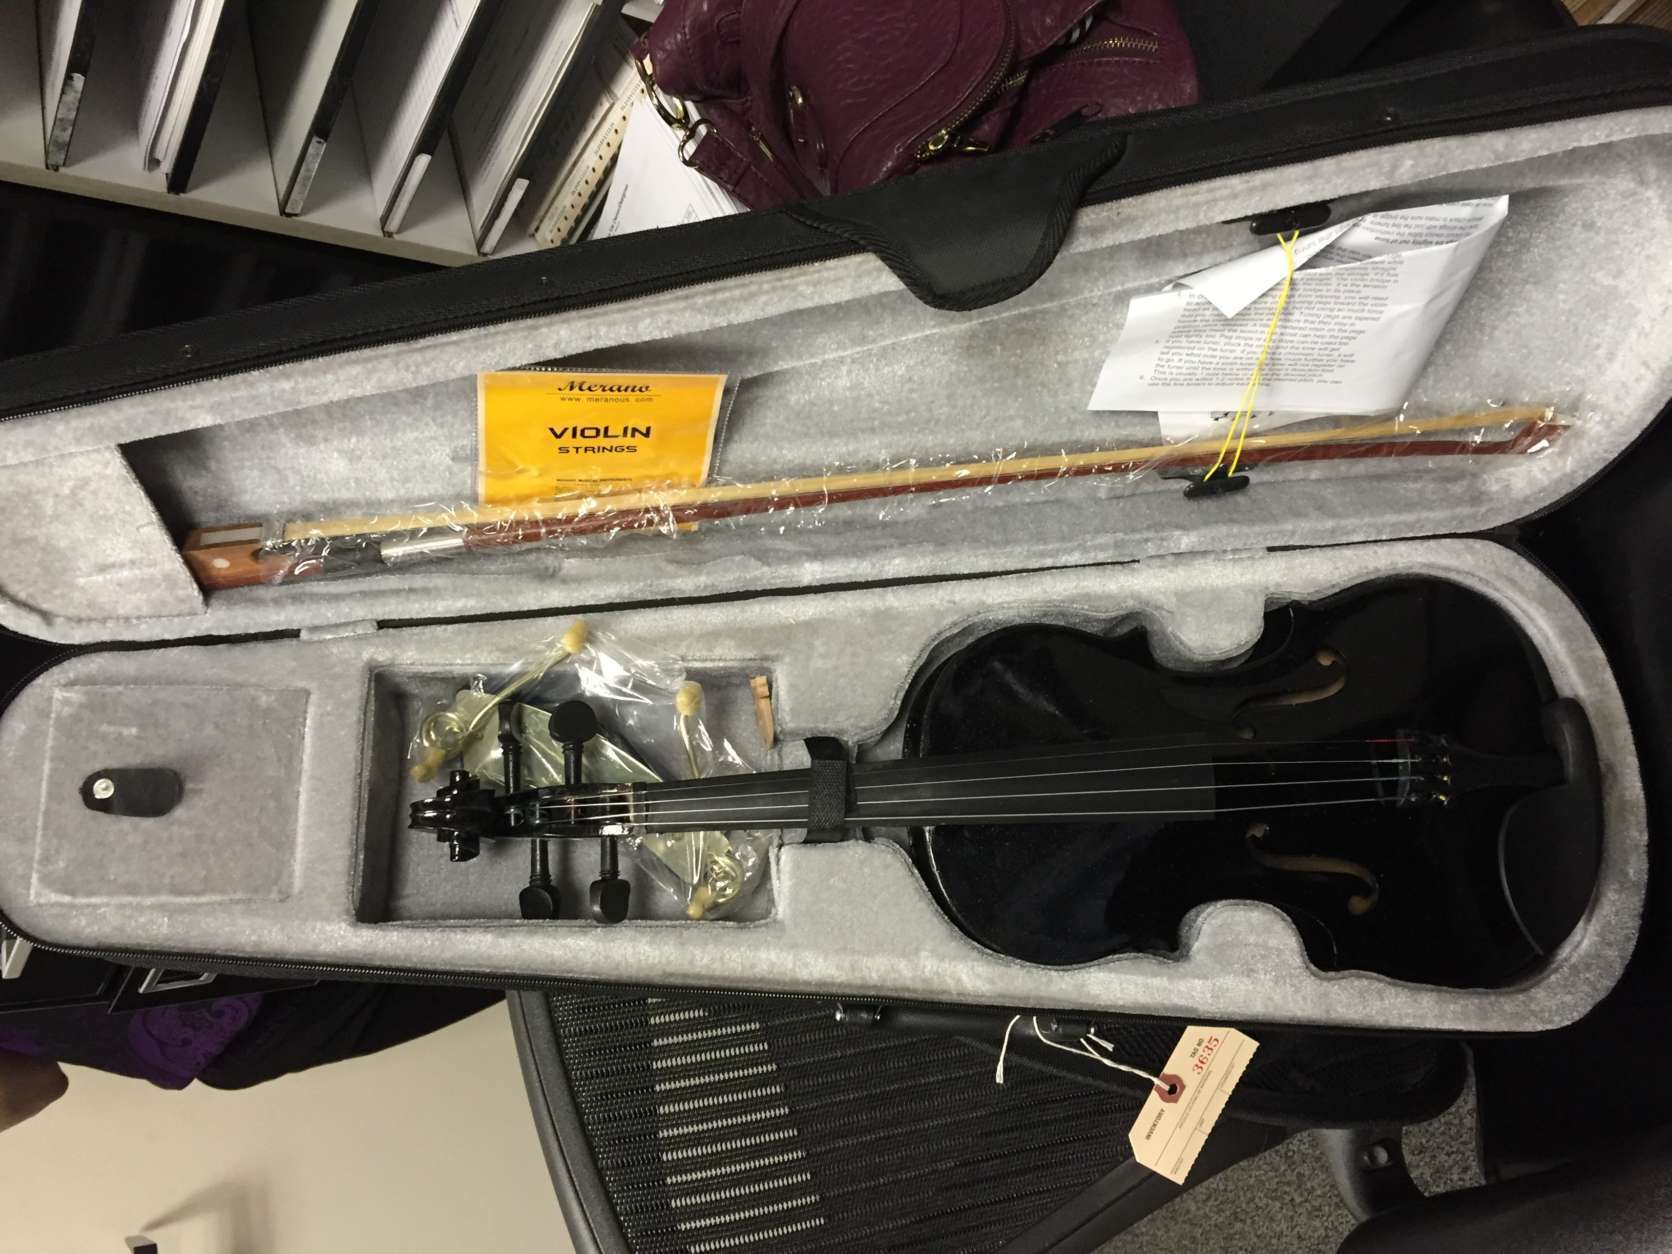 This violin was also left at TSA security at Dulles. (Courtesy TSA's Lisa Farbstein)